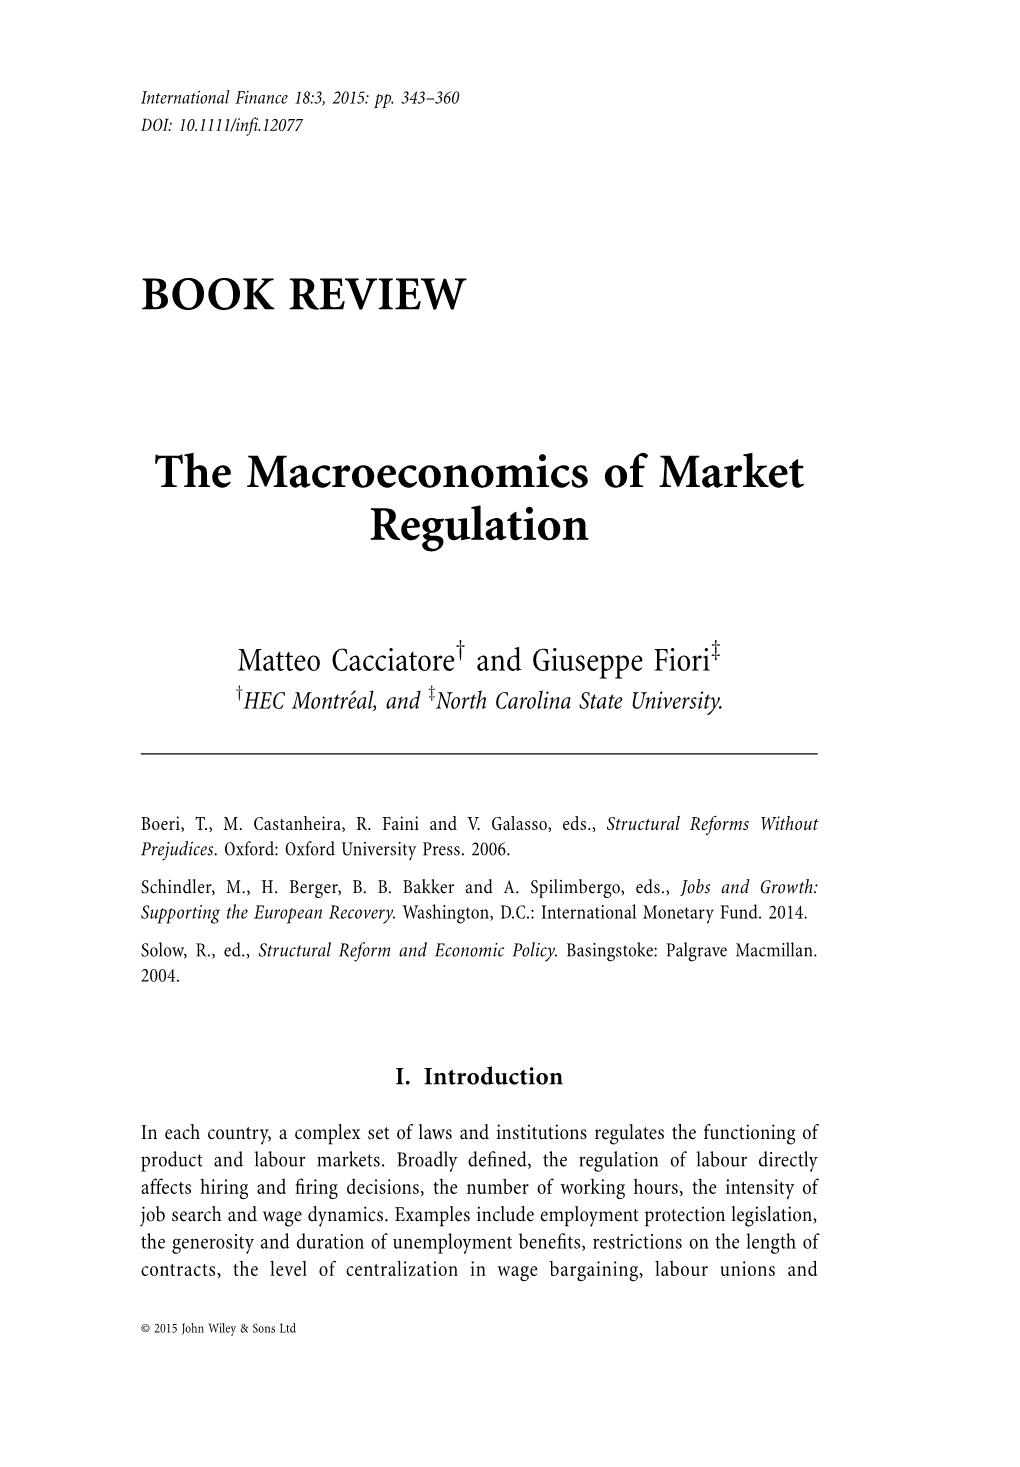 The Macroeconomics of Regulation